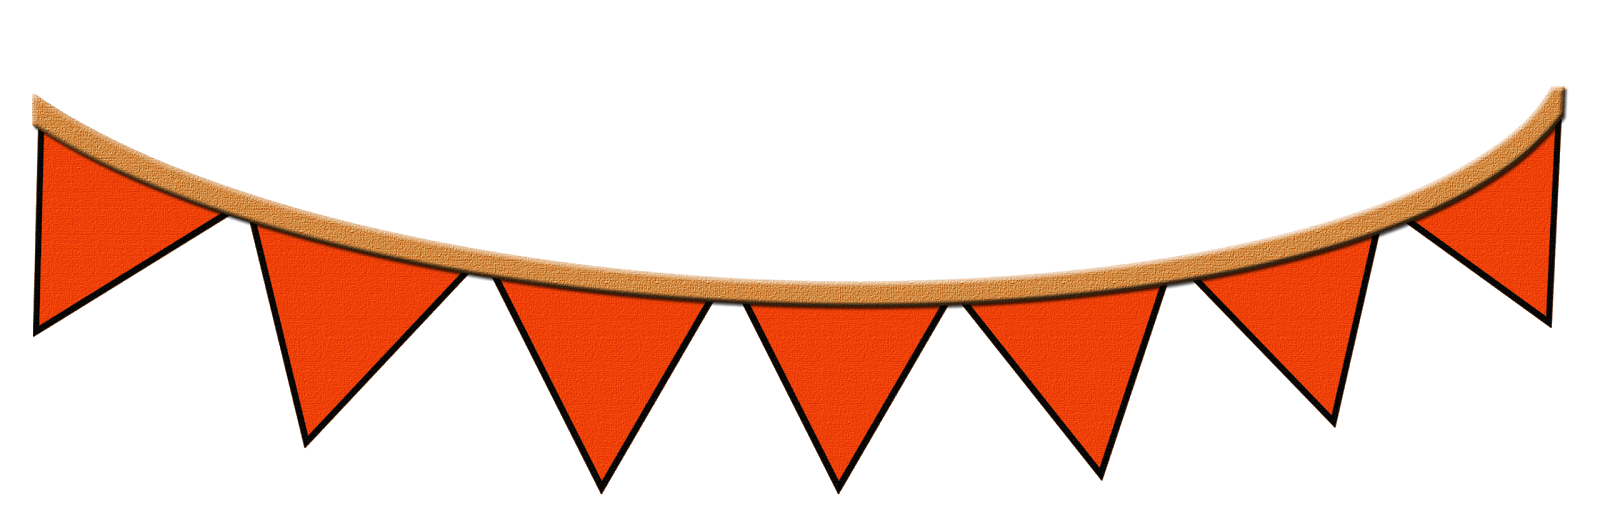 Banner arancione PNG Immagine di alta qualità